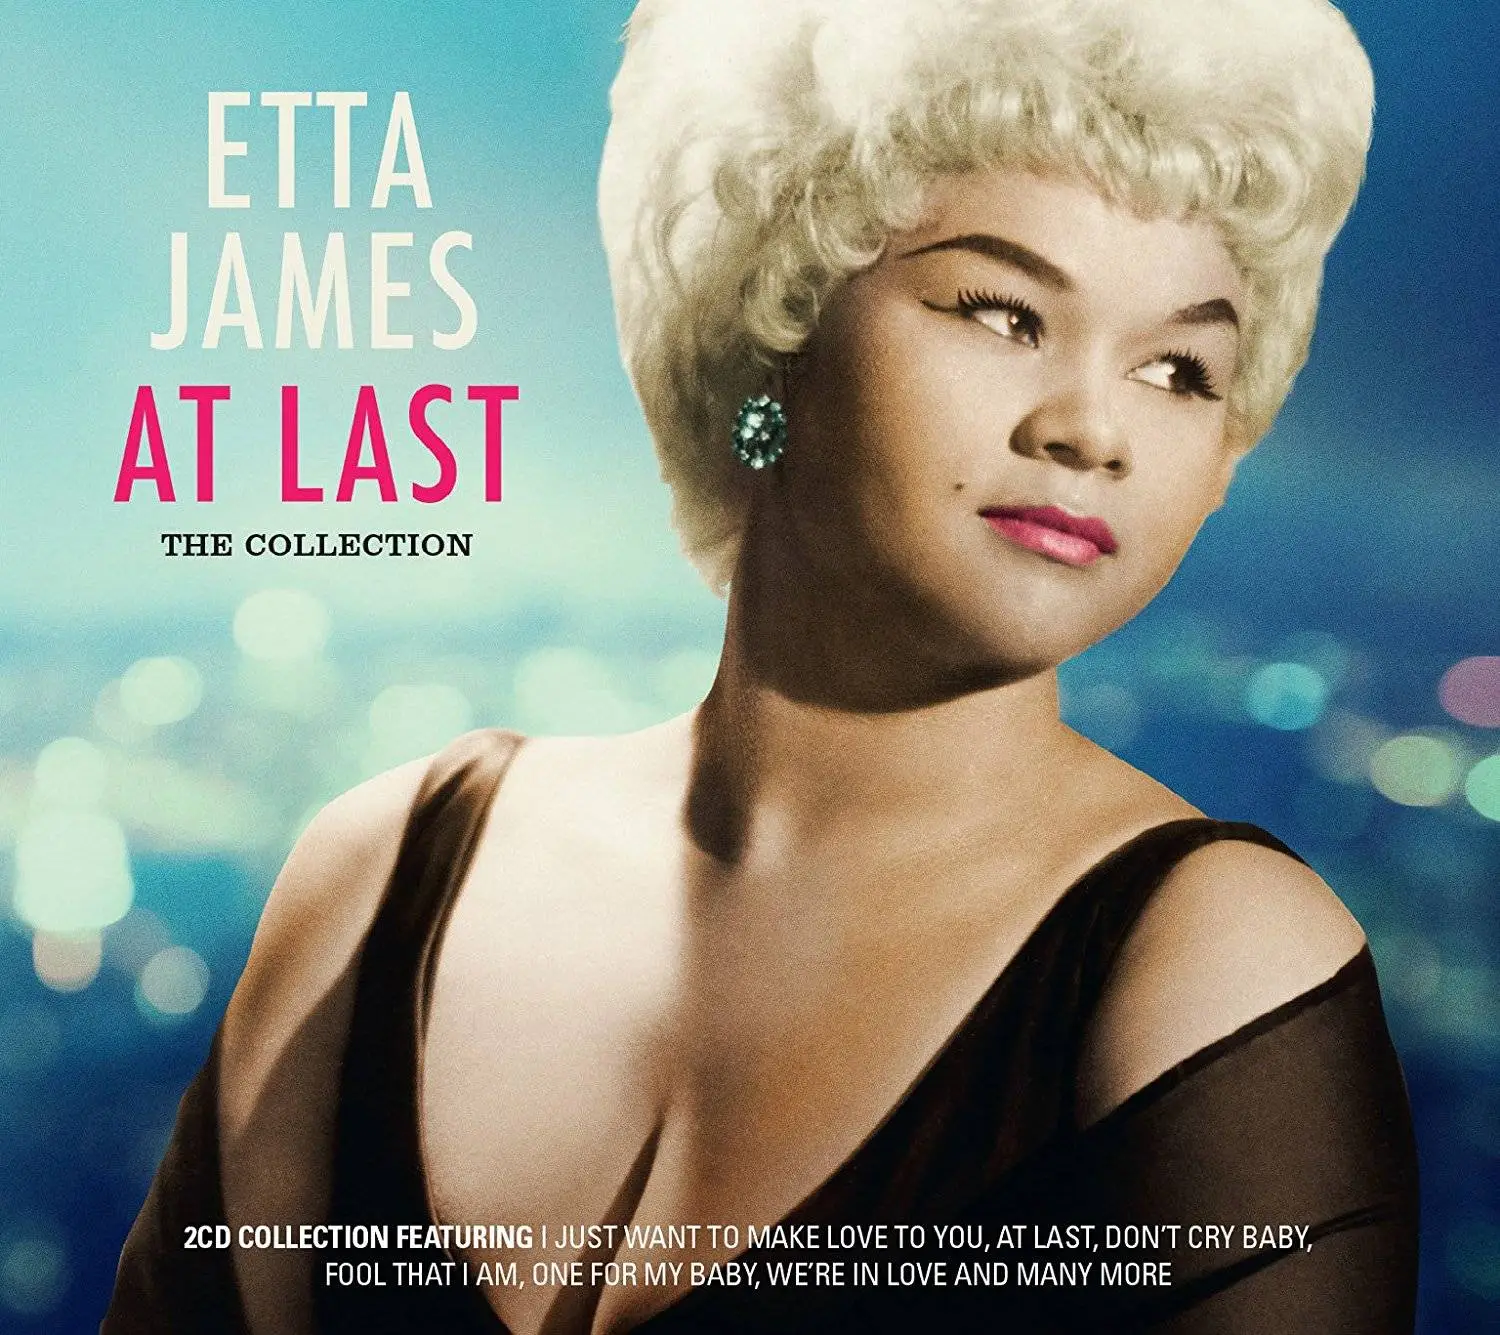 At last. Этта Джеймс АТ ласт. Etta James (1960) at last\. At last! Этта Джеймс. James Etta: Etta James.